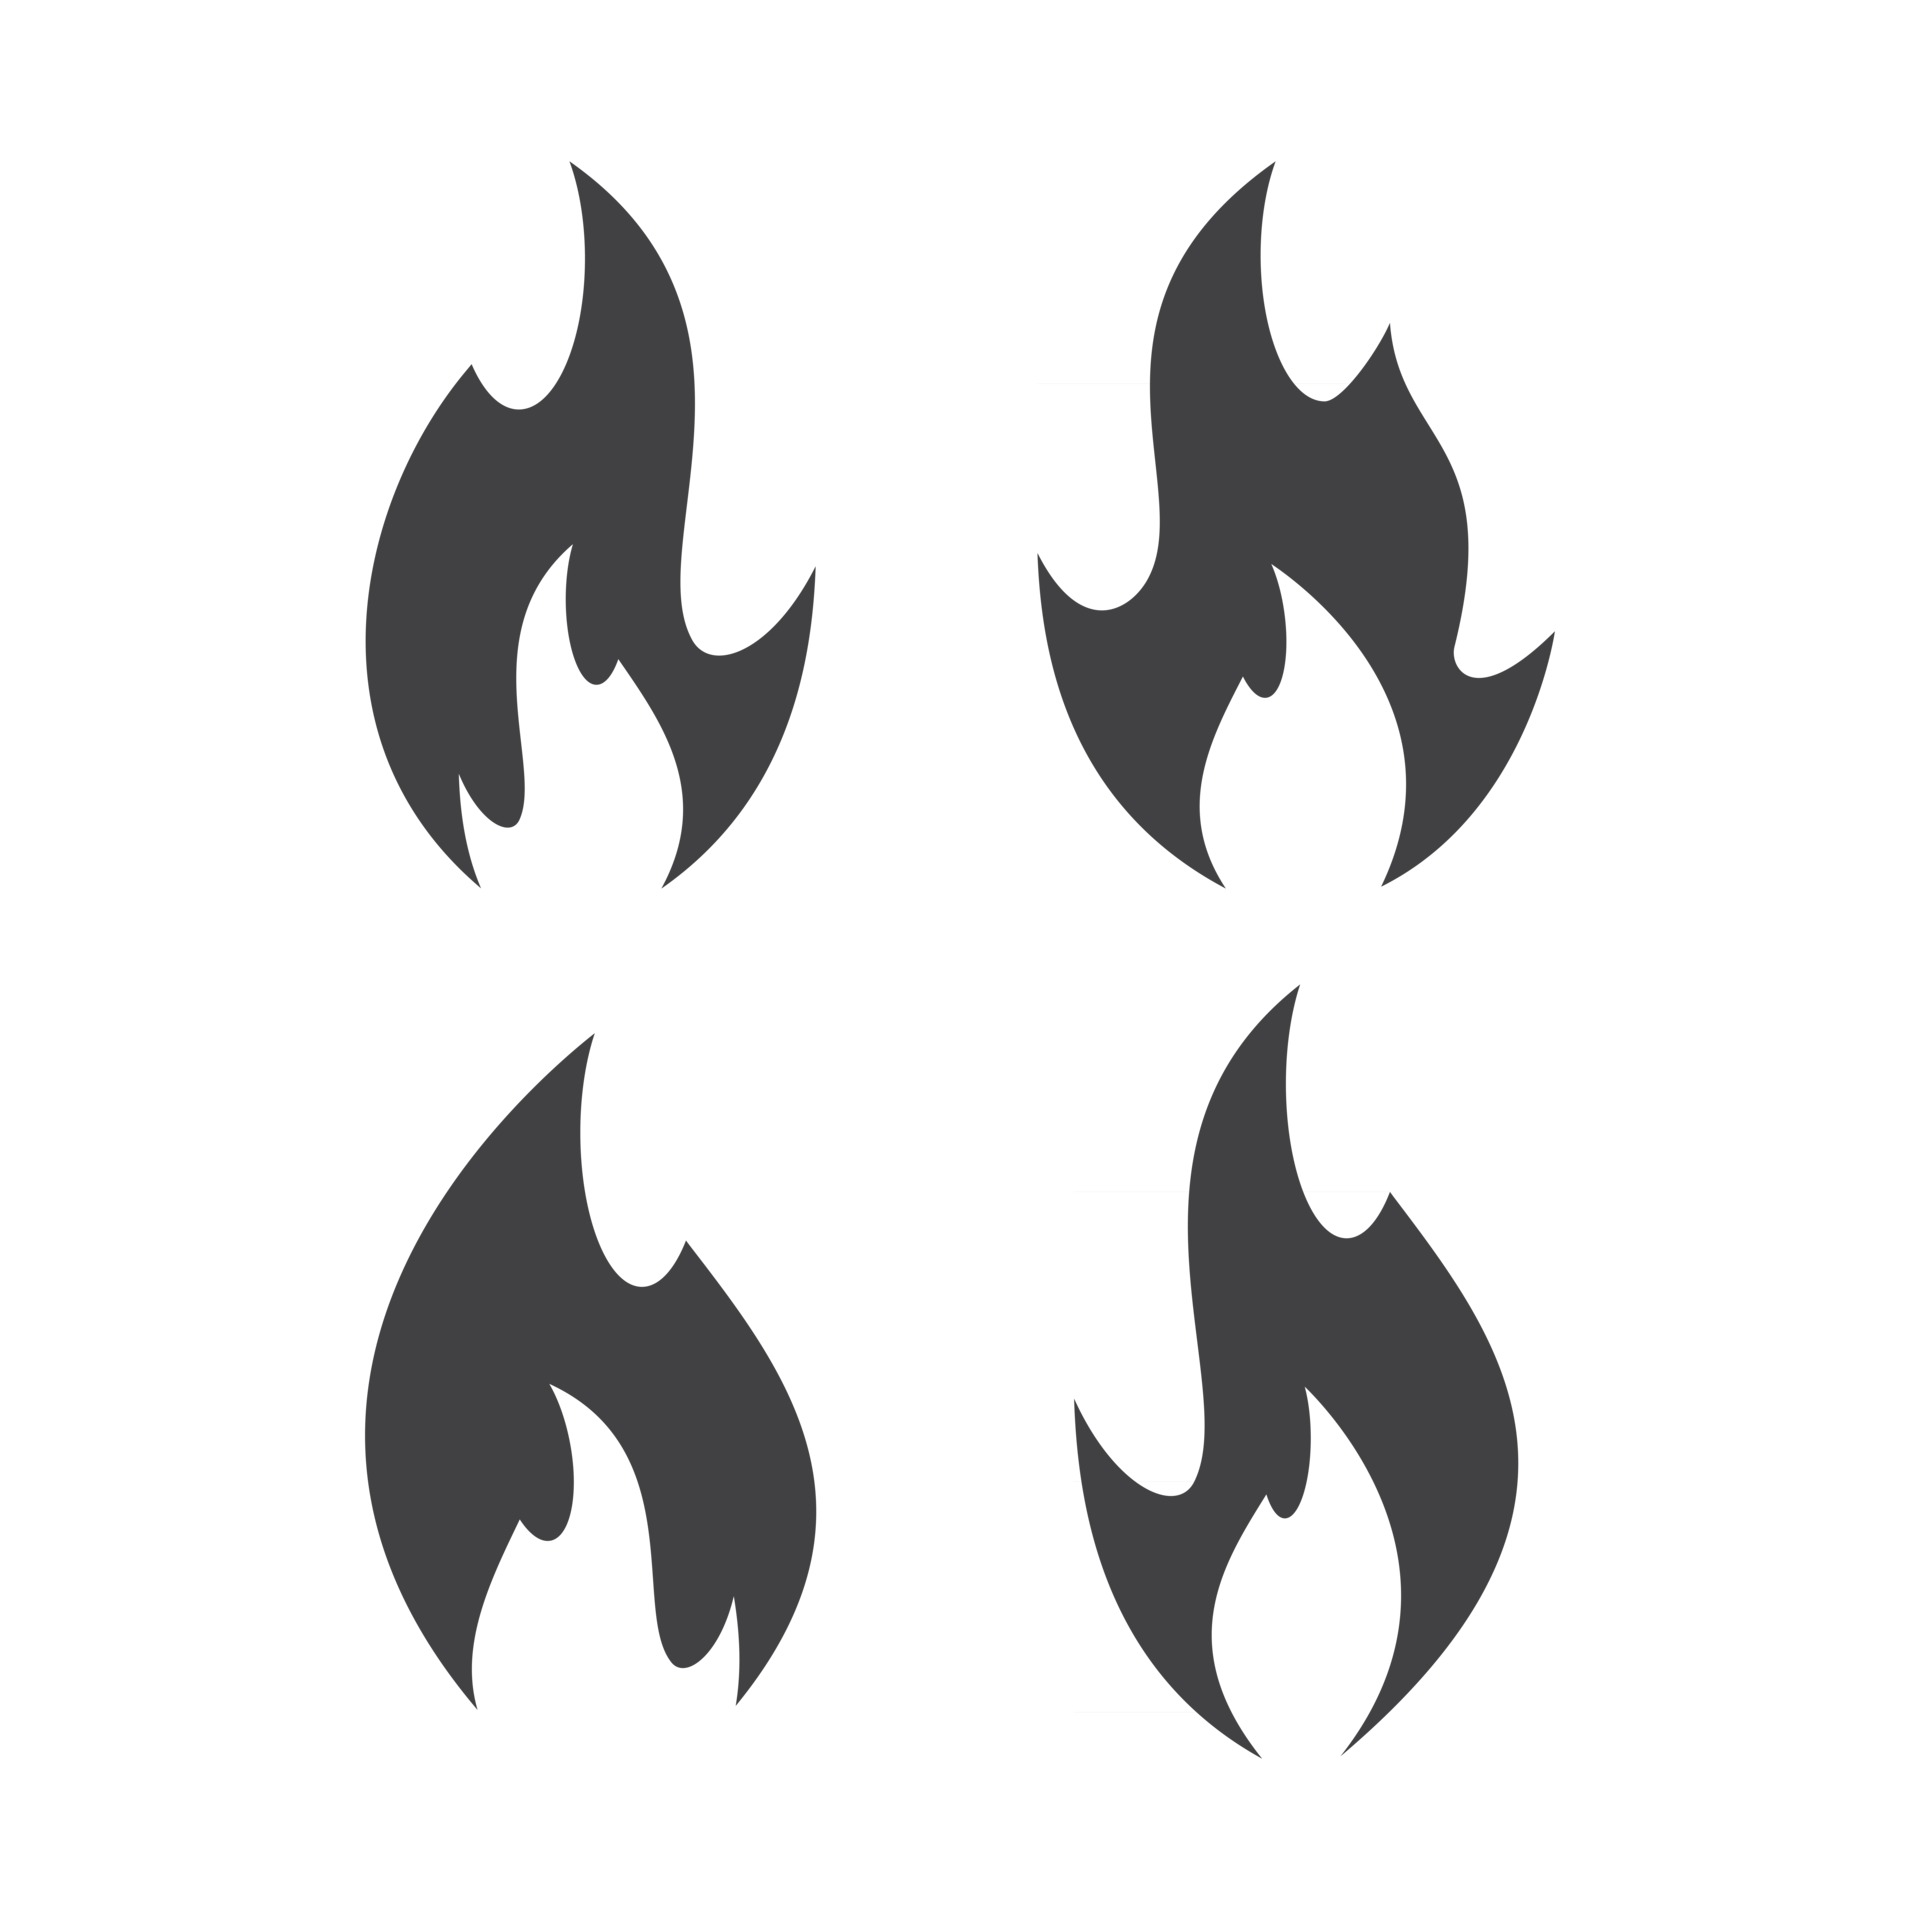 Fire logo images 2927633 Vector Art at Vecteezy